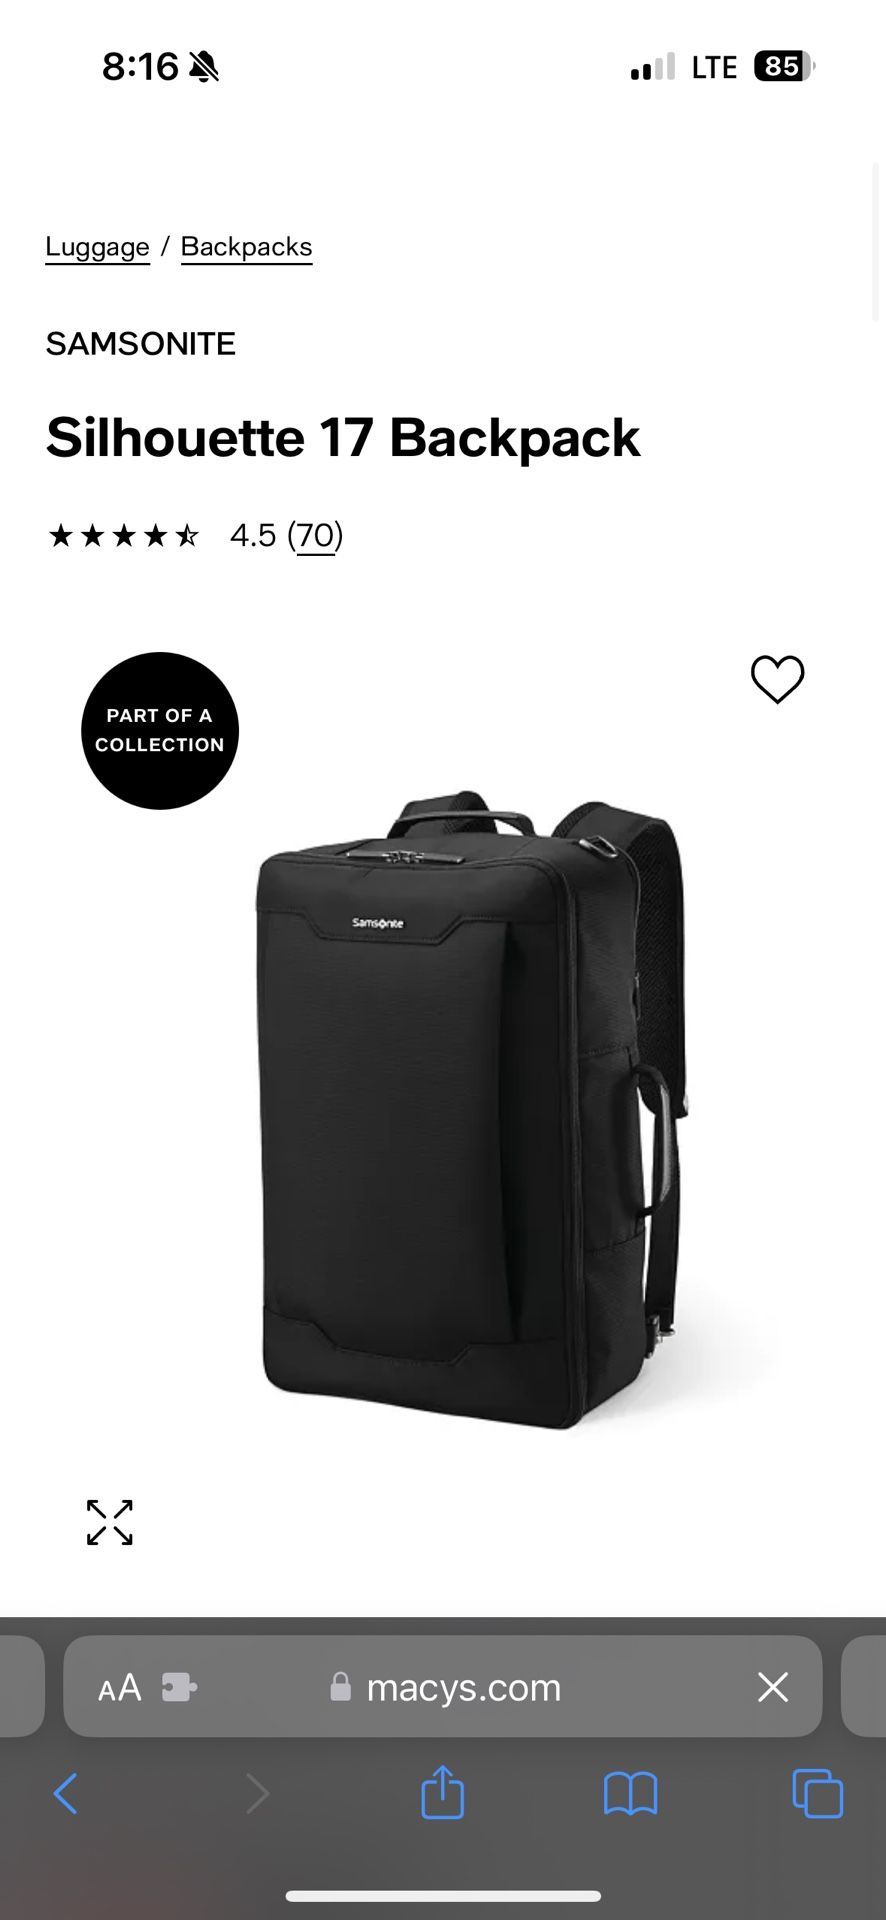 Luggage- Samsonite Travel Backpack 